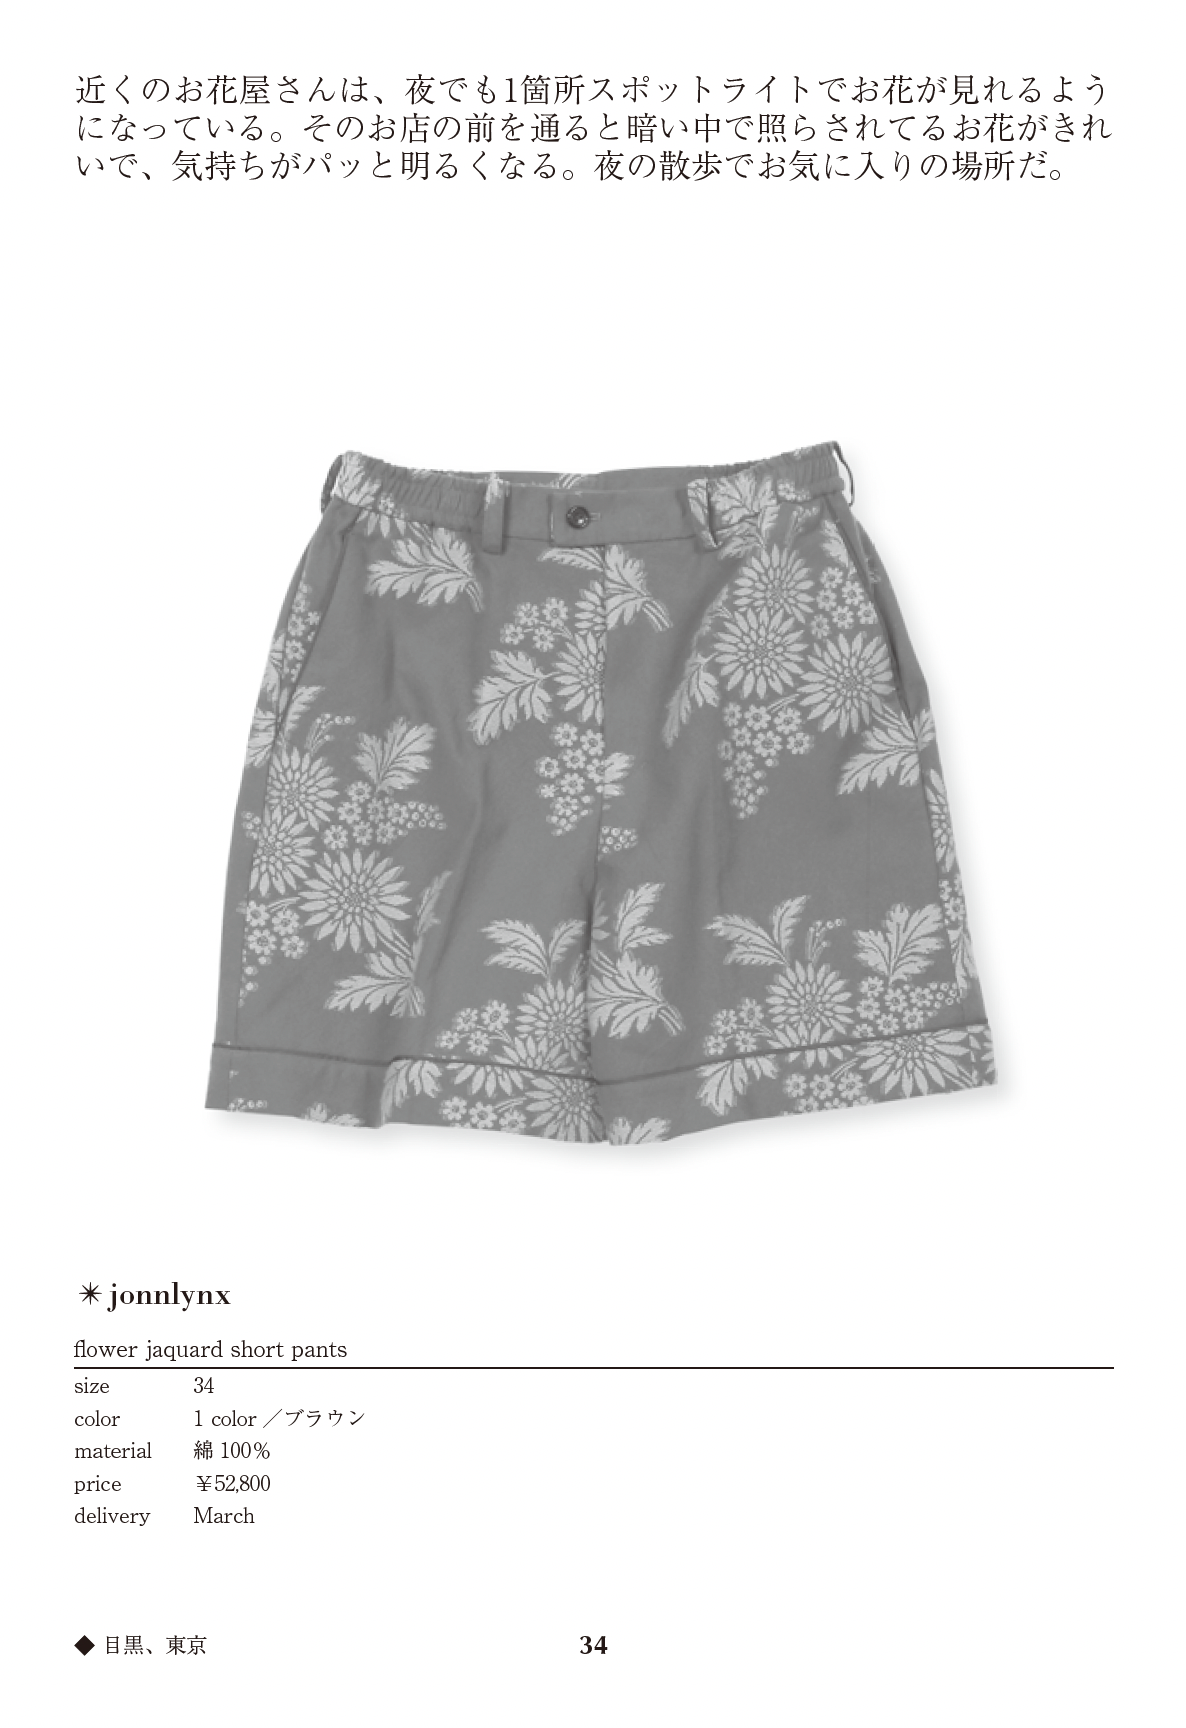 Flower jaquard short pants